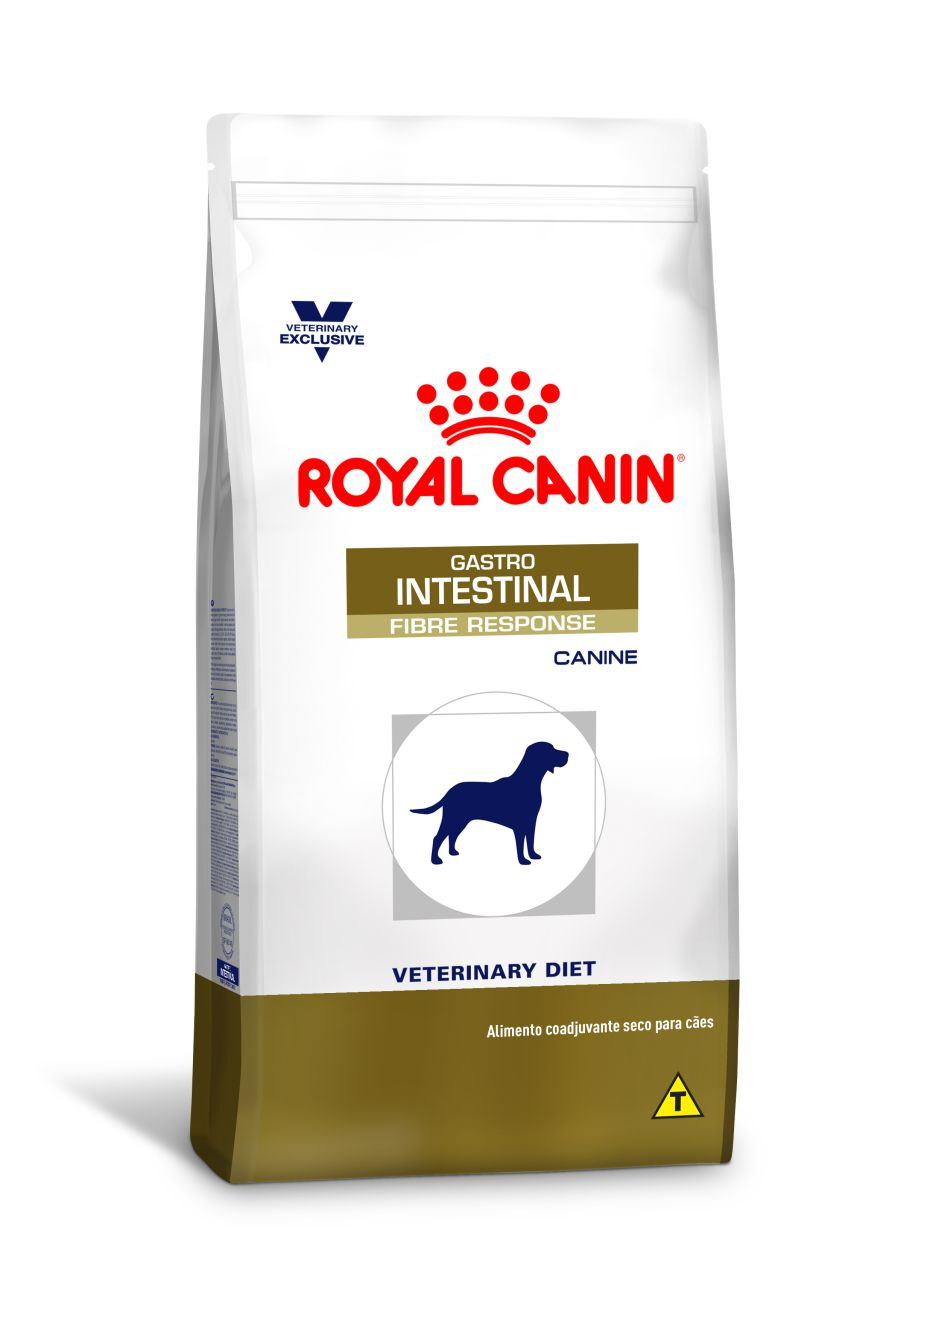 fibre response royal canin dog